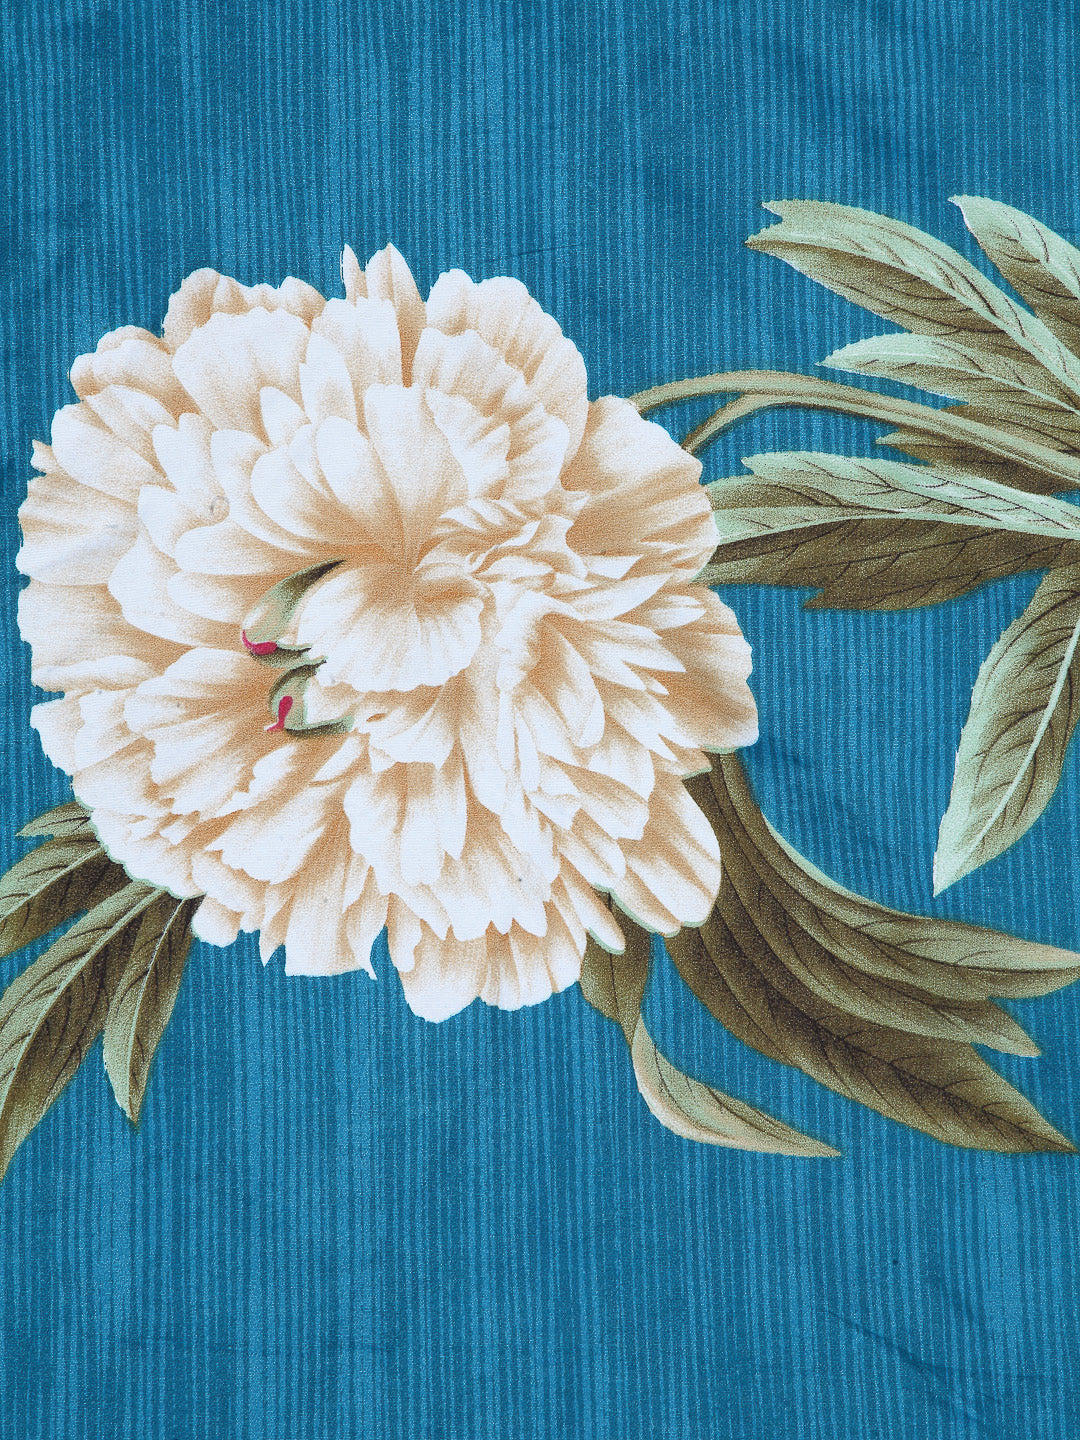 Arrabi Teal Floral TC Cotton Blend Single Size Bedsheet with 1 Pillow Cover (220 X 150 cm)